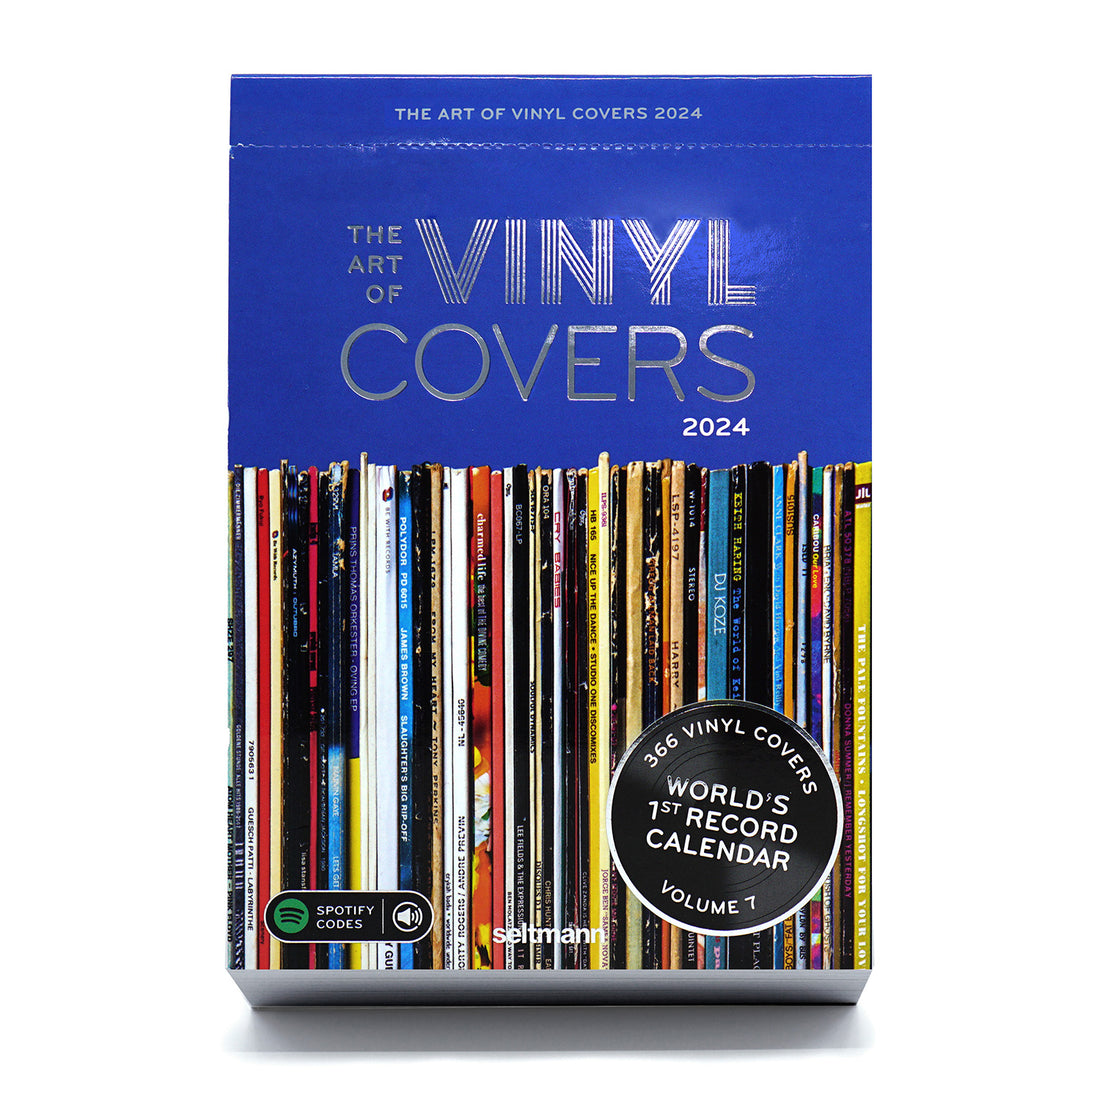 The Art of Vinyl Covers